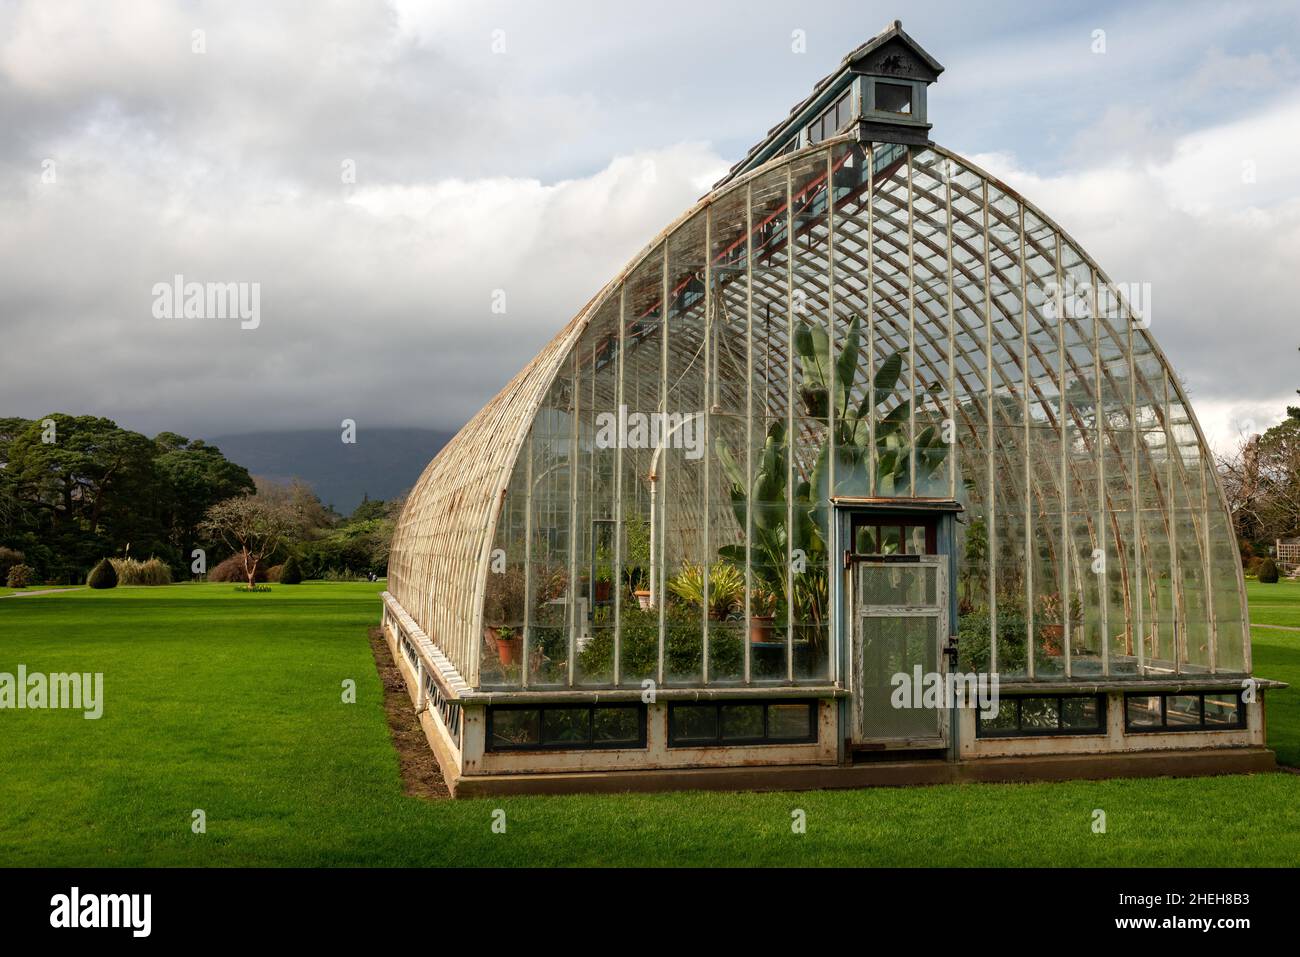 The Muckross Gardens picturesque Edwardian greenhouse glasshouse with its exotic flowers and plants. Botanical hothouse Ireland. Stock Photo